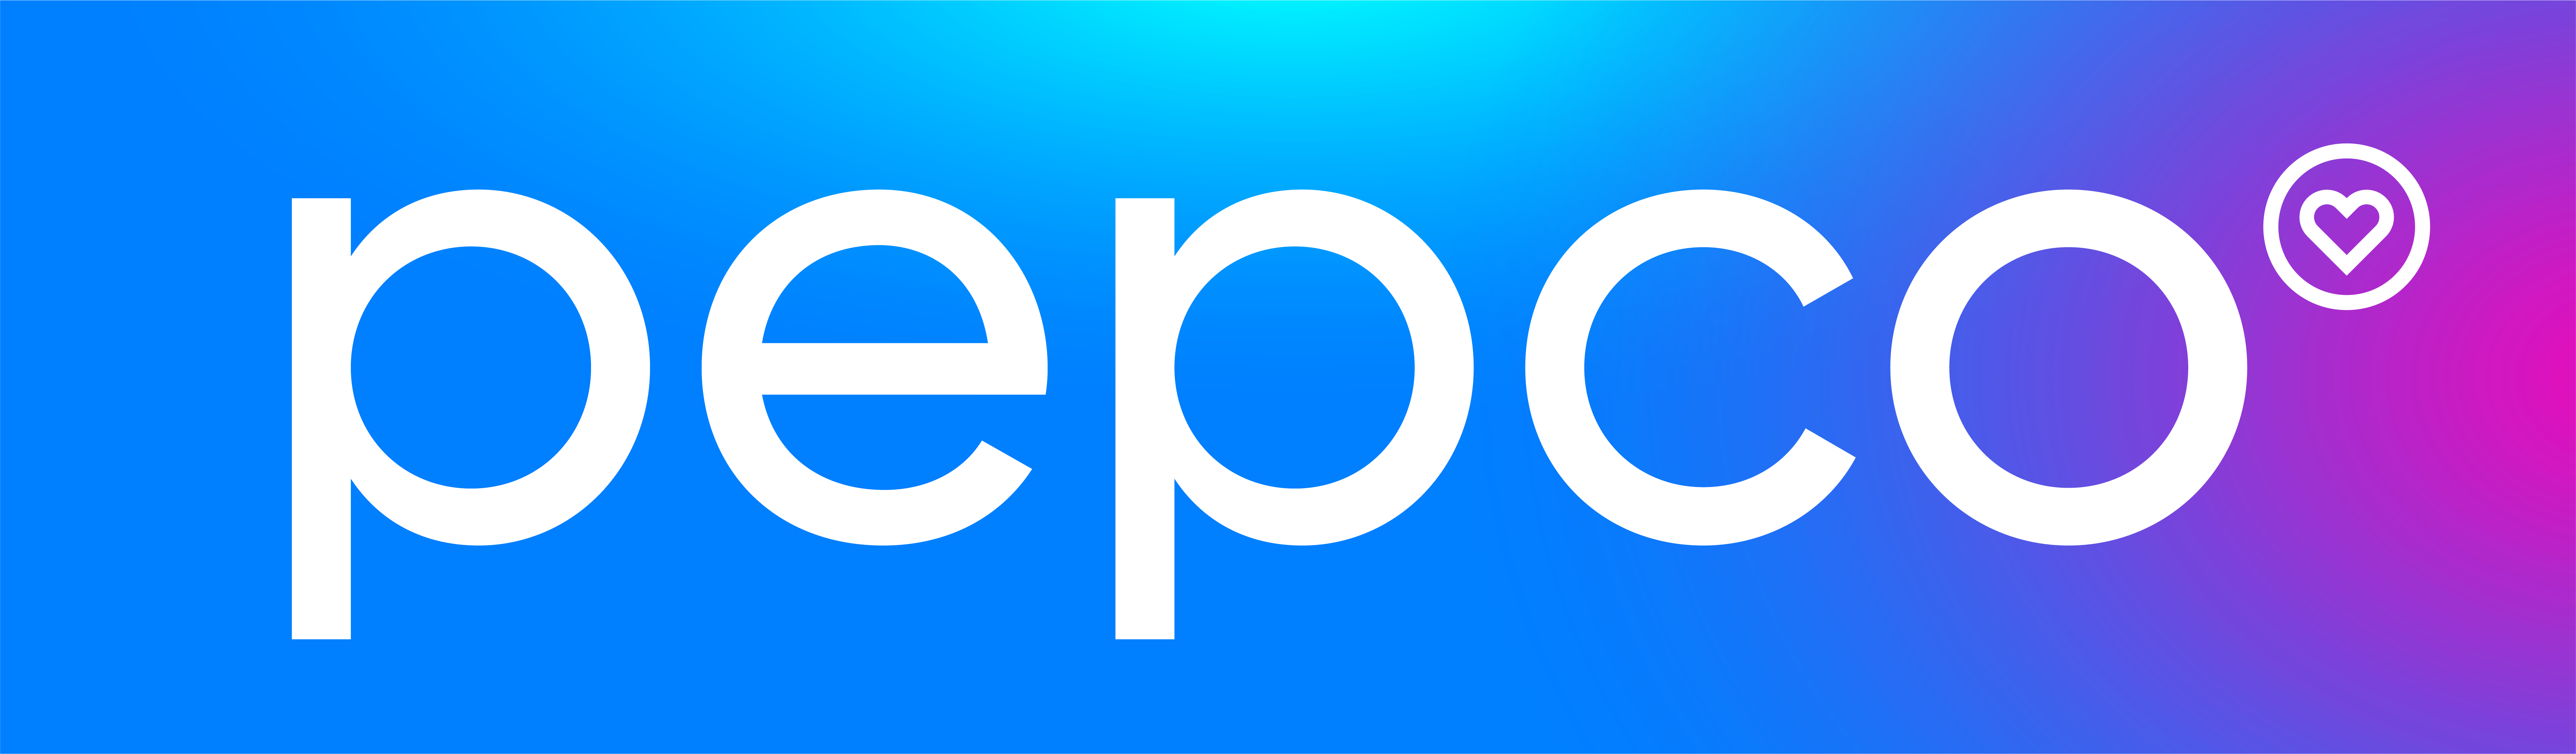 Pepco-logo-CMYK-TAB.jpg